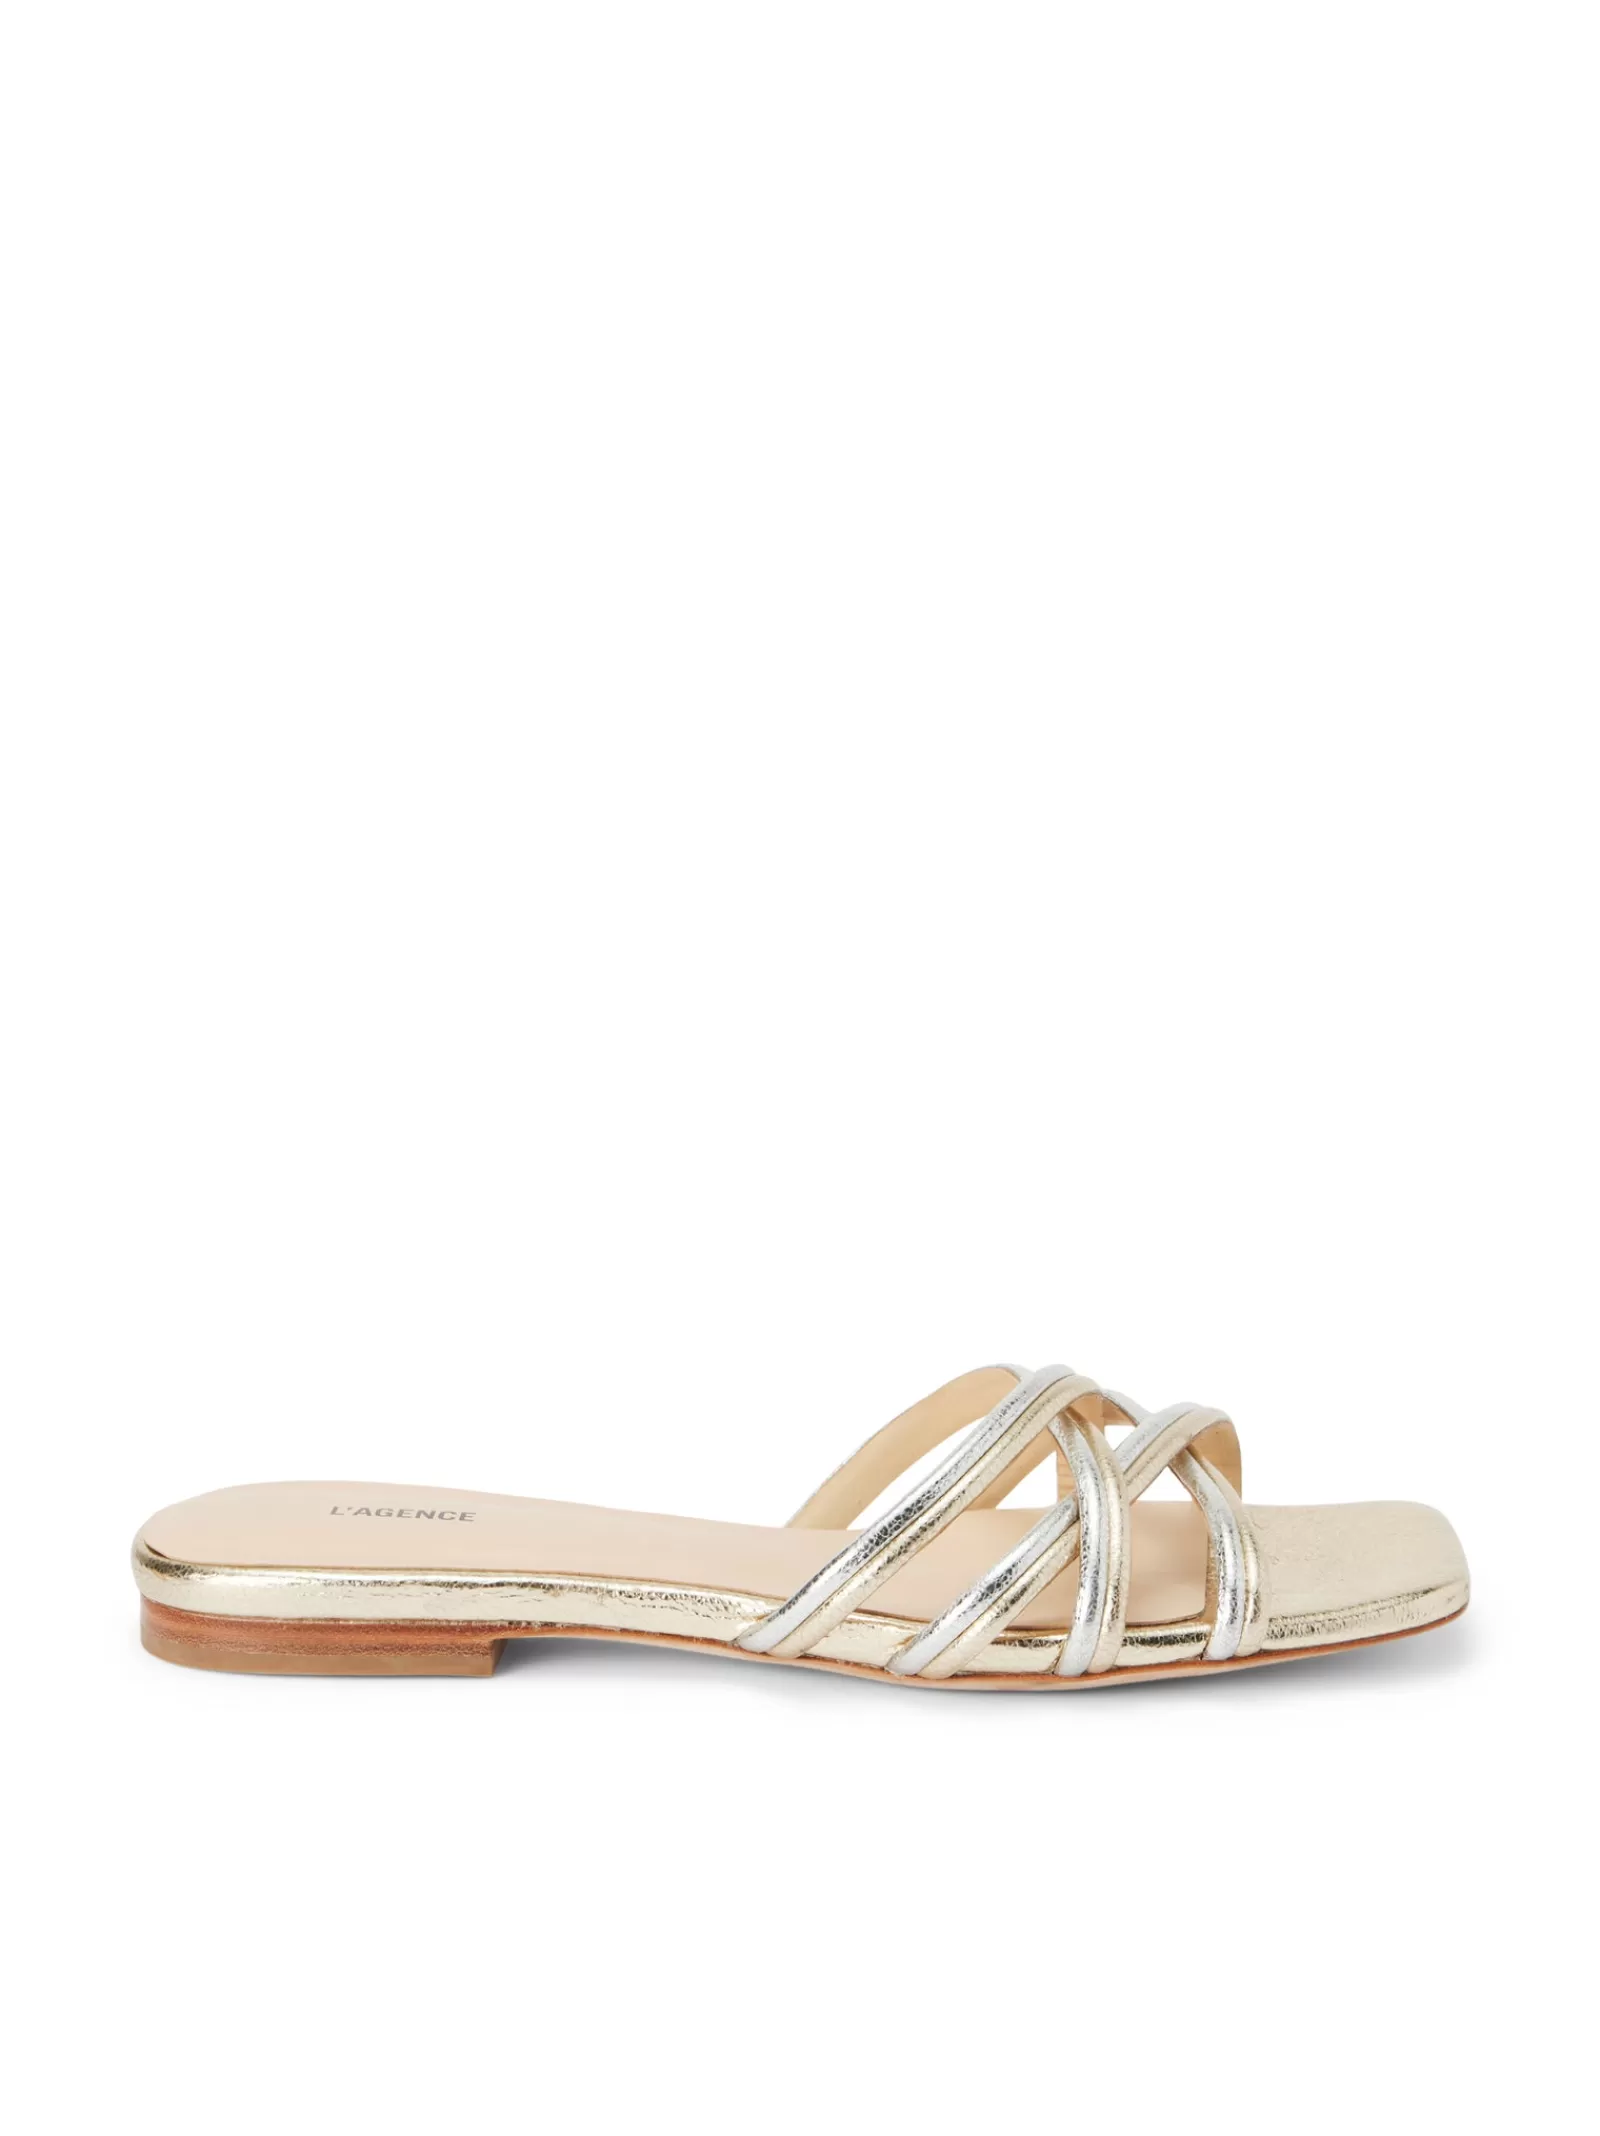 L'AGENCE Abelle Flat Sandal< Spring Collection | Sandals & Wedges